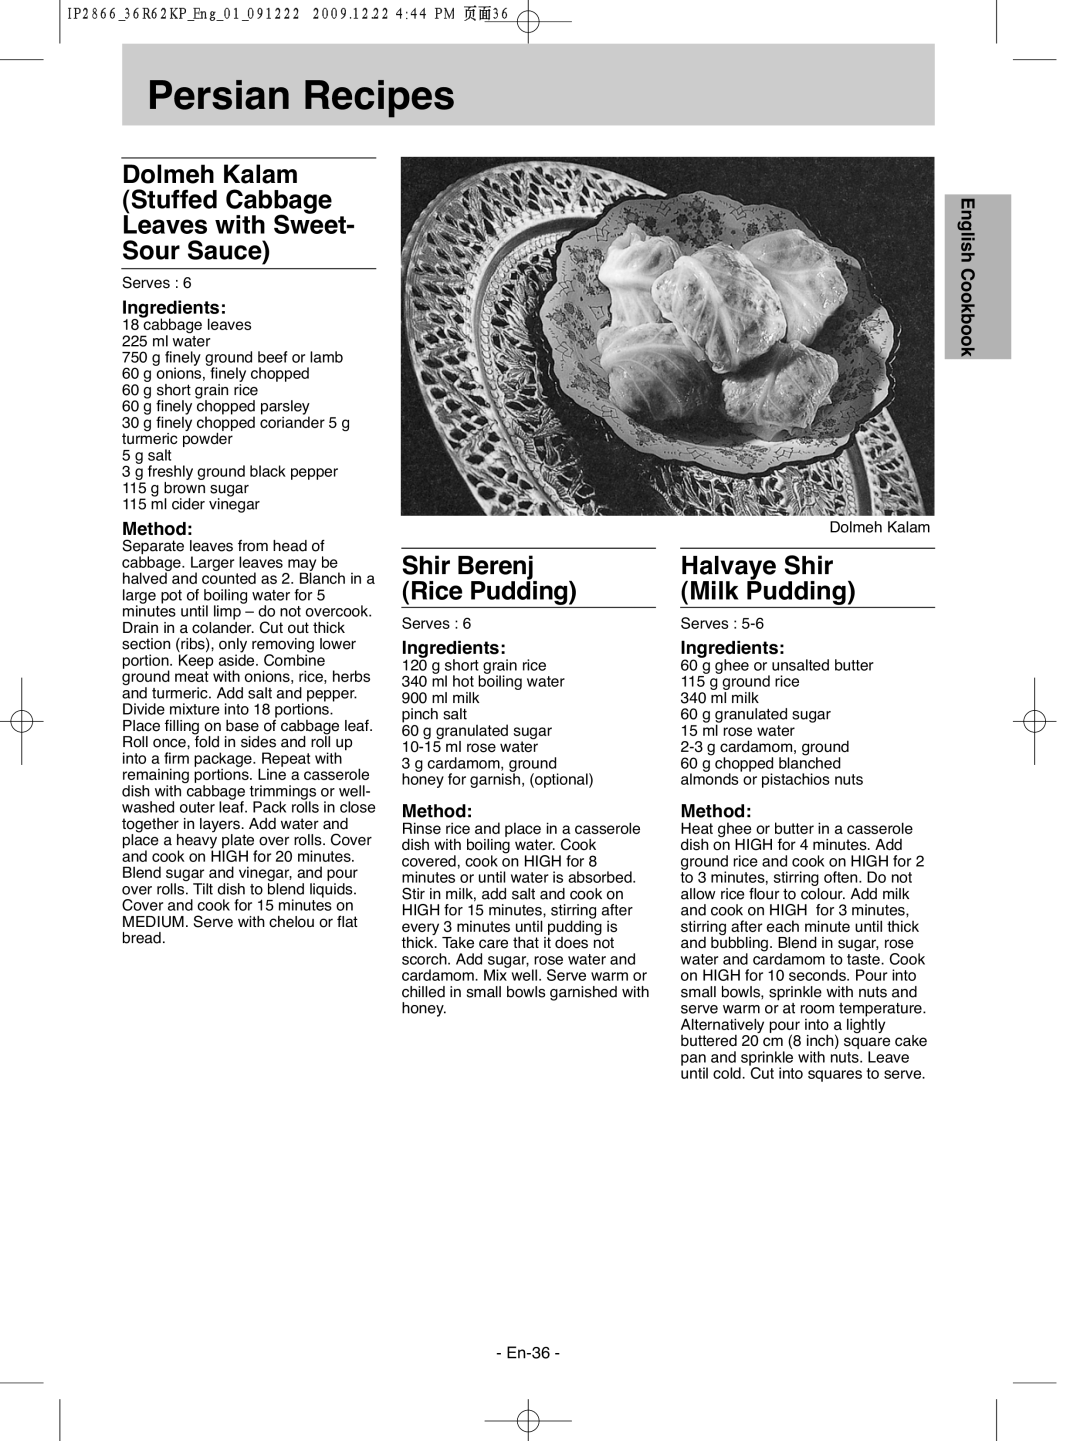 Panasonic NN-G335WF Halvaye Shir Milk Pudding, Dolmeh Kalam Stuffed Cabbage Leaves with Sweet- Sour Sauce, Persian Recipes 